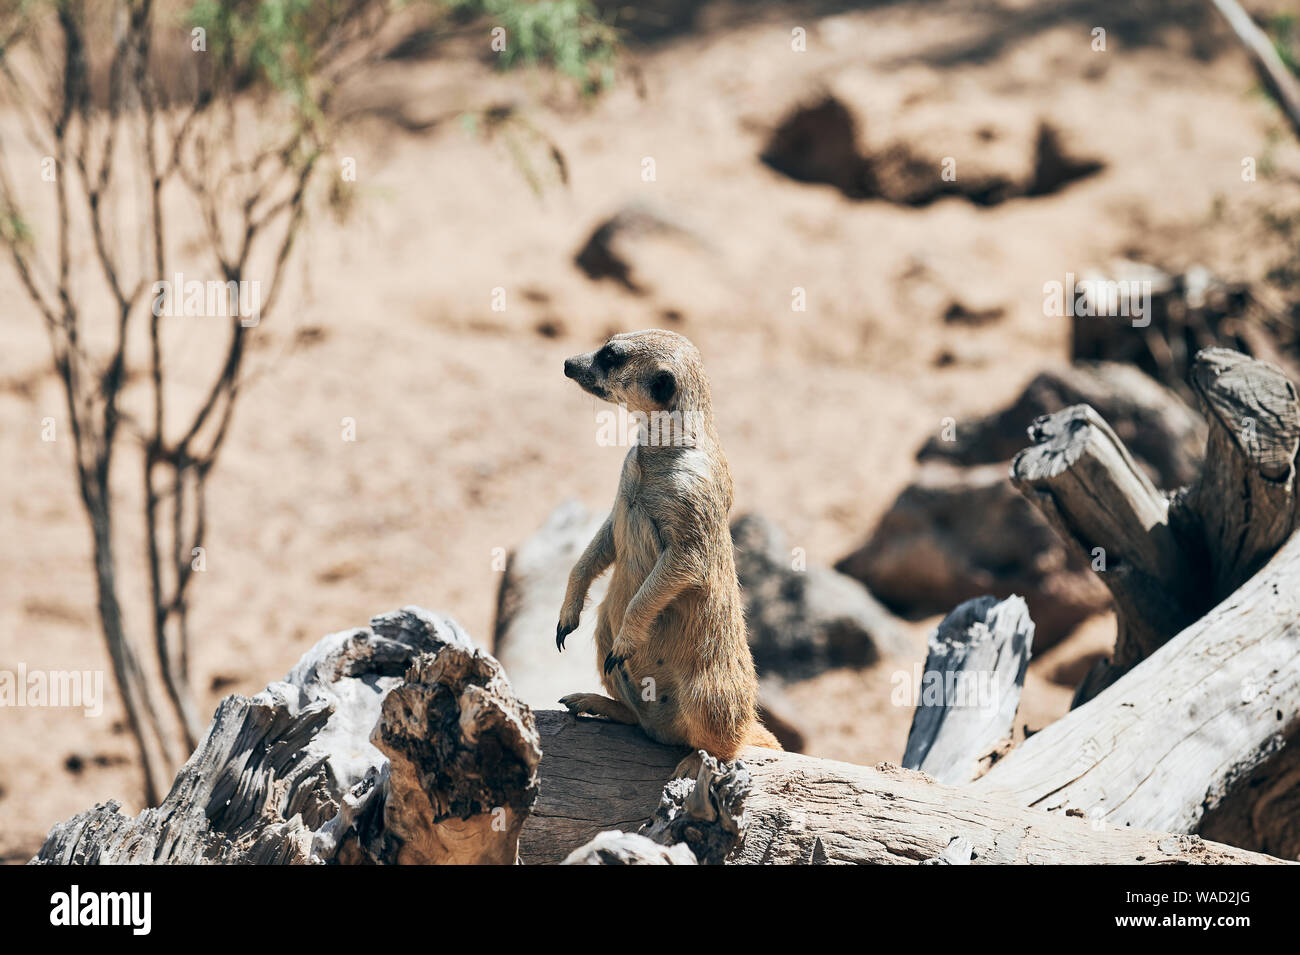 Vista laterale di meerkat lanky guardando intorno sul log in luogo caldo in Tenerife Foto Stock